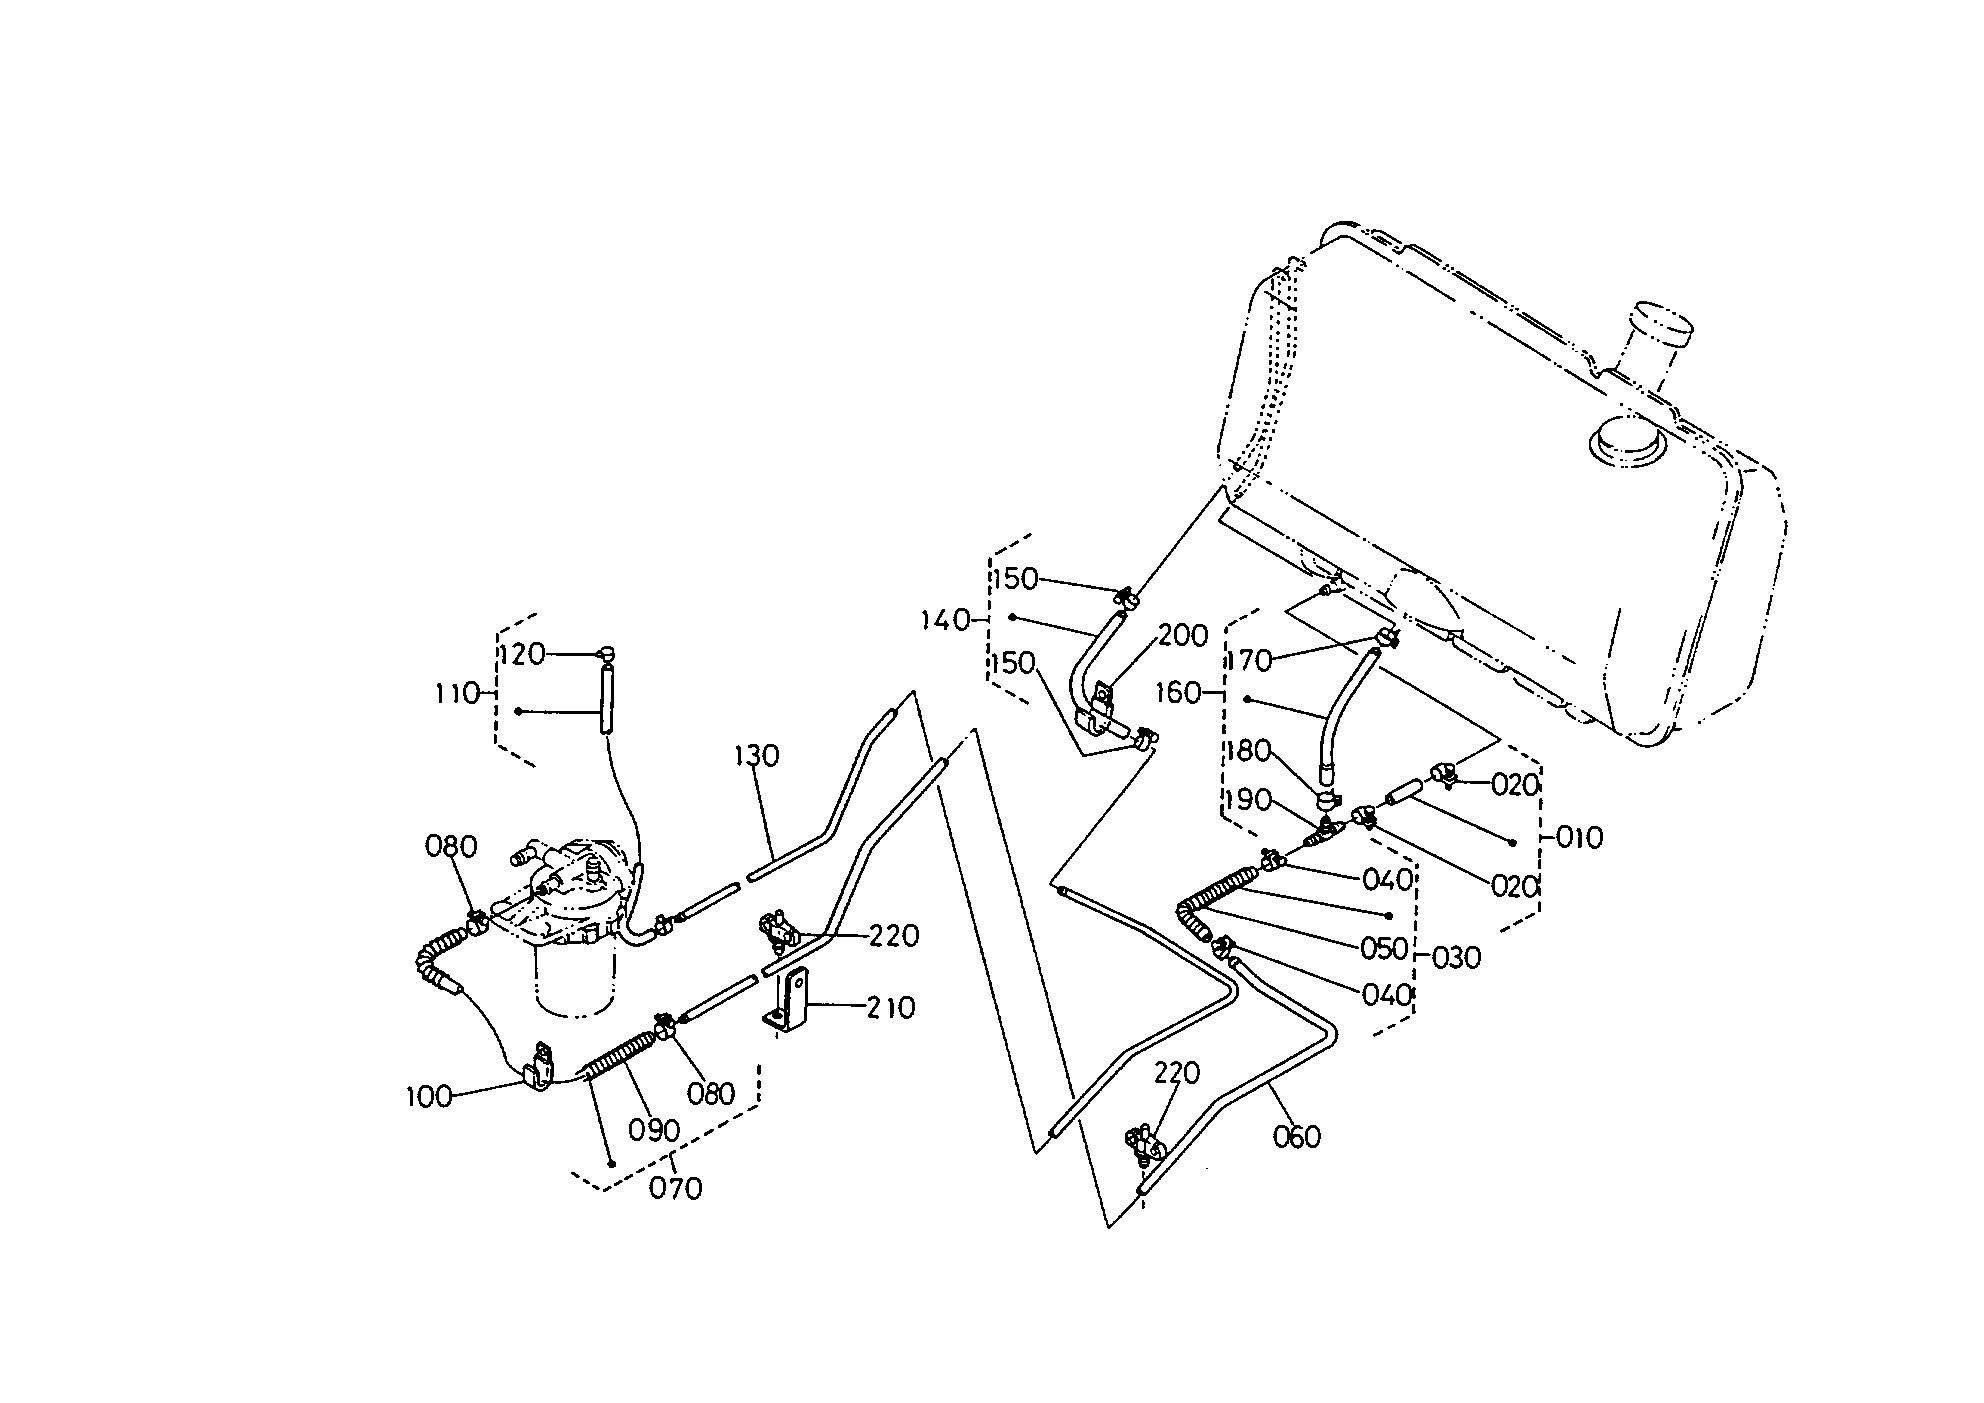 diagram of fuel line hookups at bottom of fuel tank on a L3350